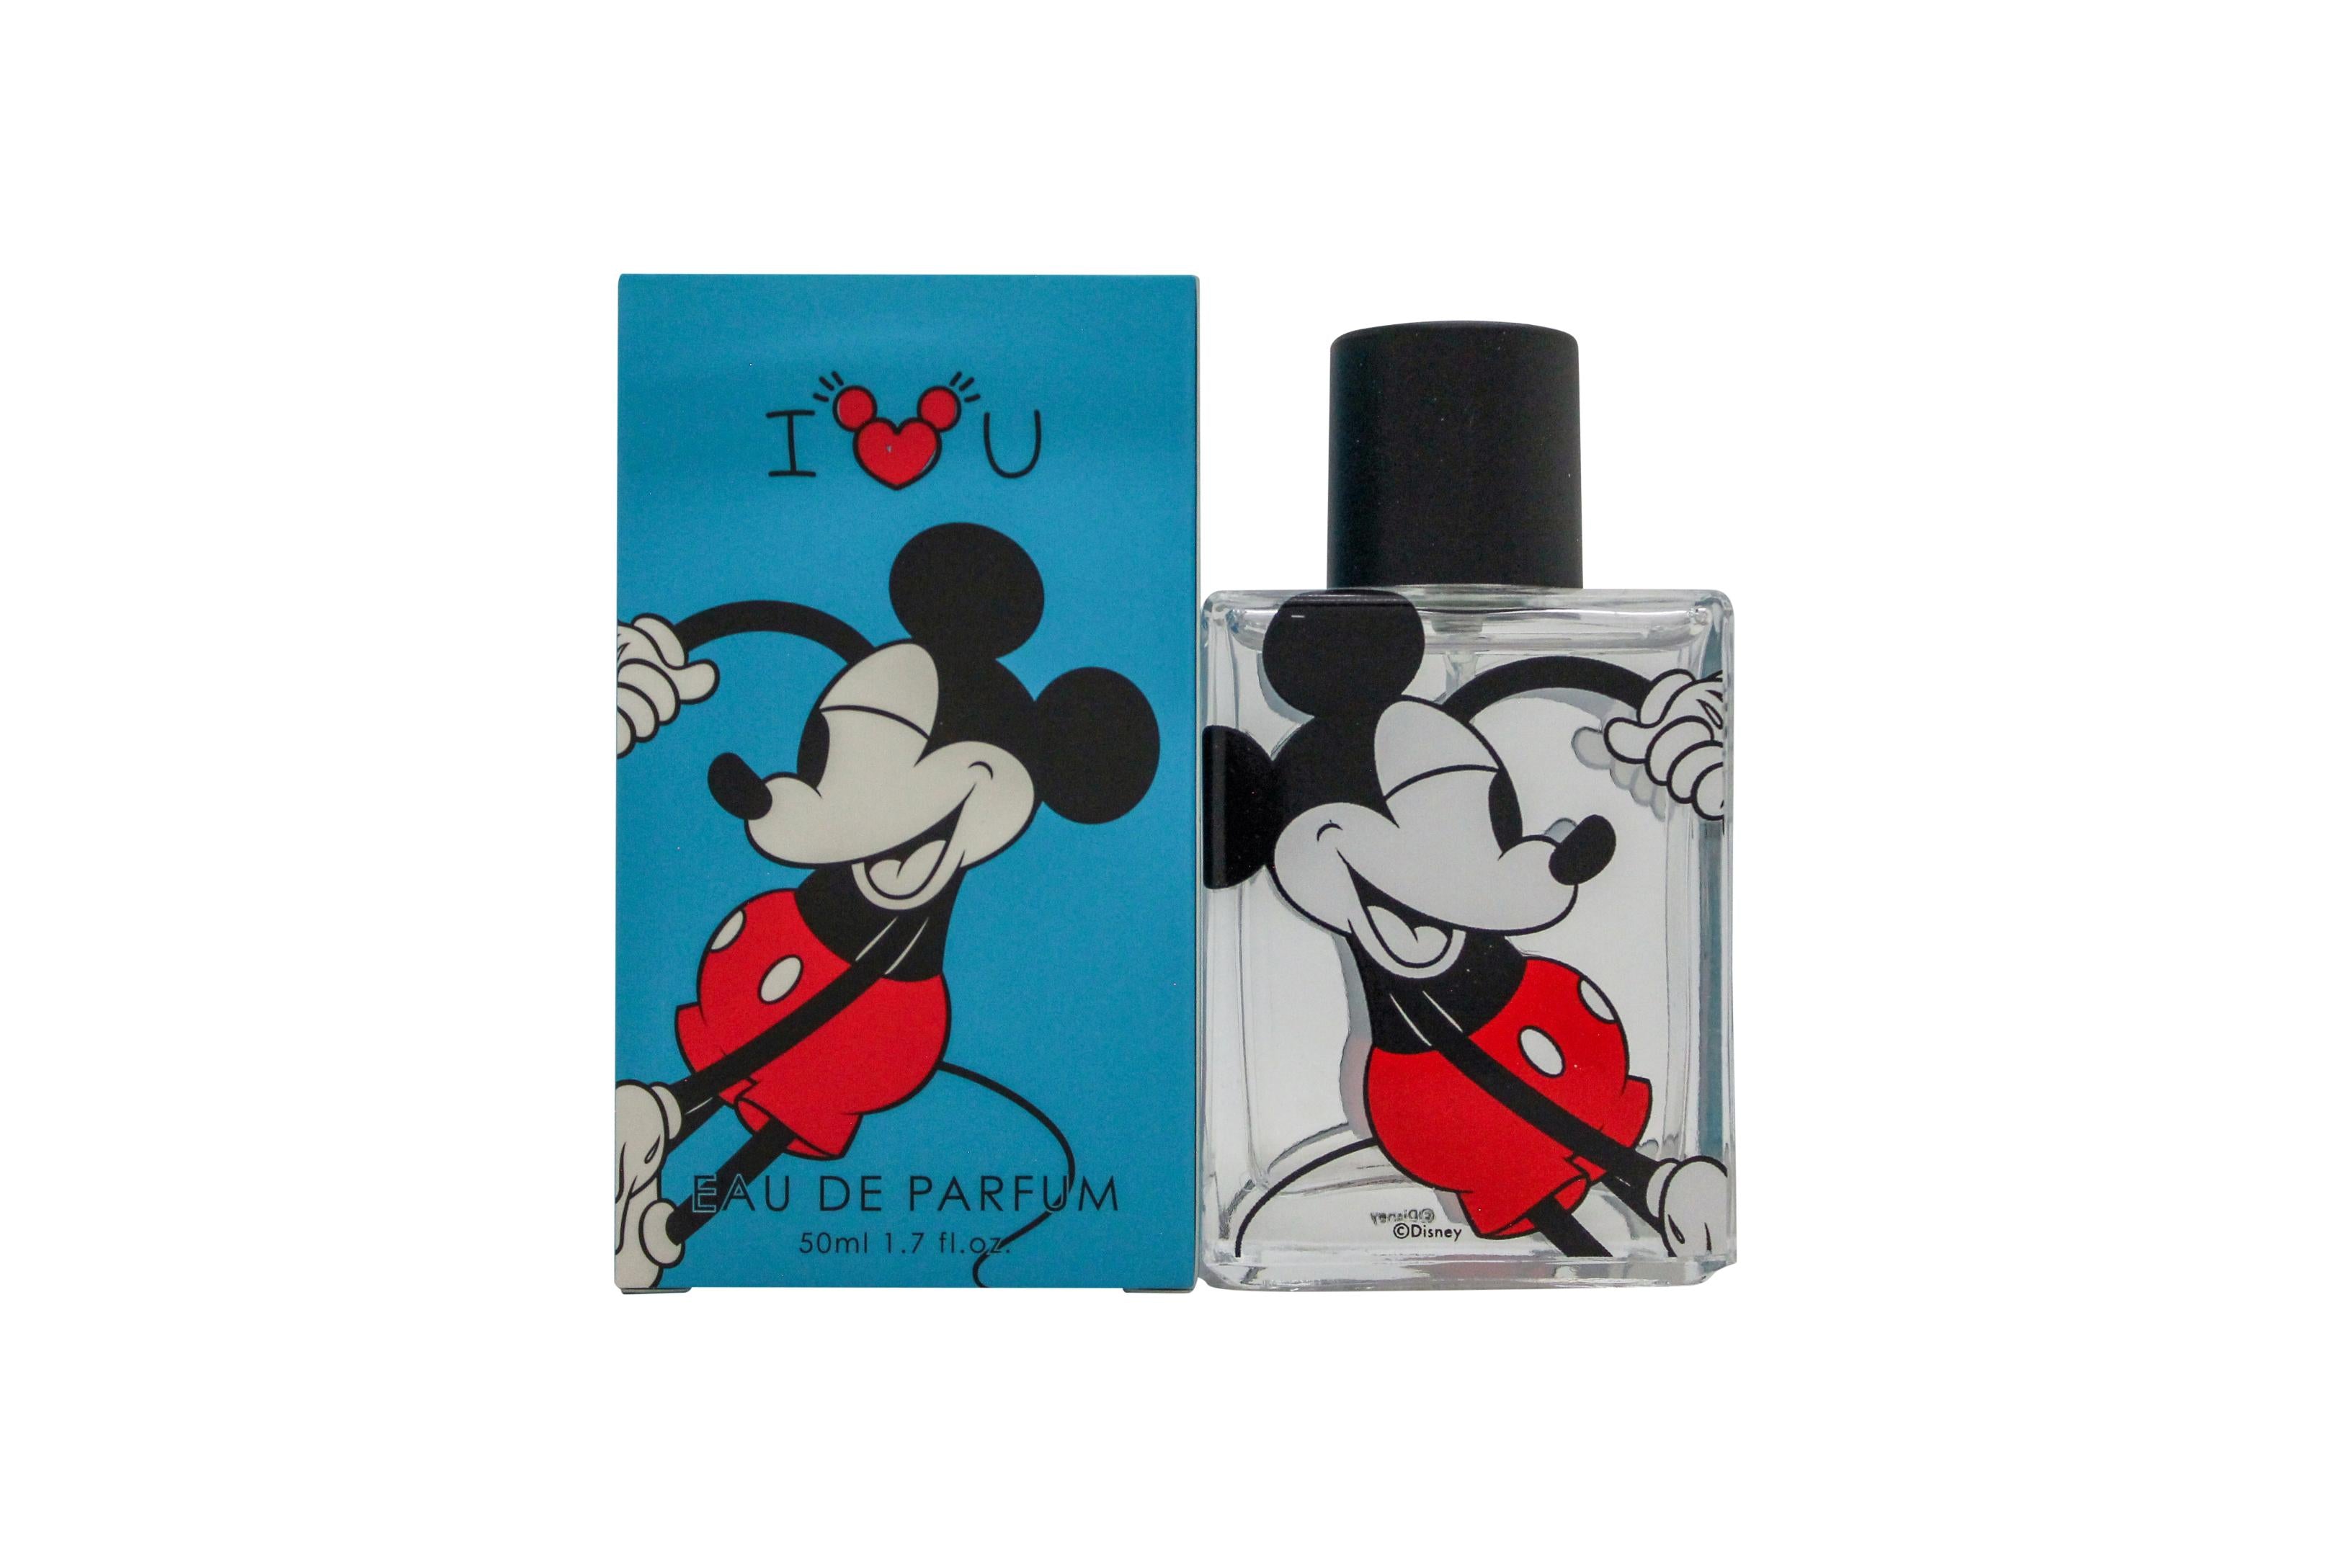 View Disney Mickey Mouse I Love You Eau de Parfum 50ml Spray information